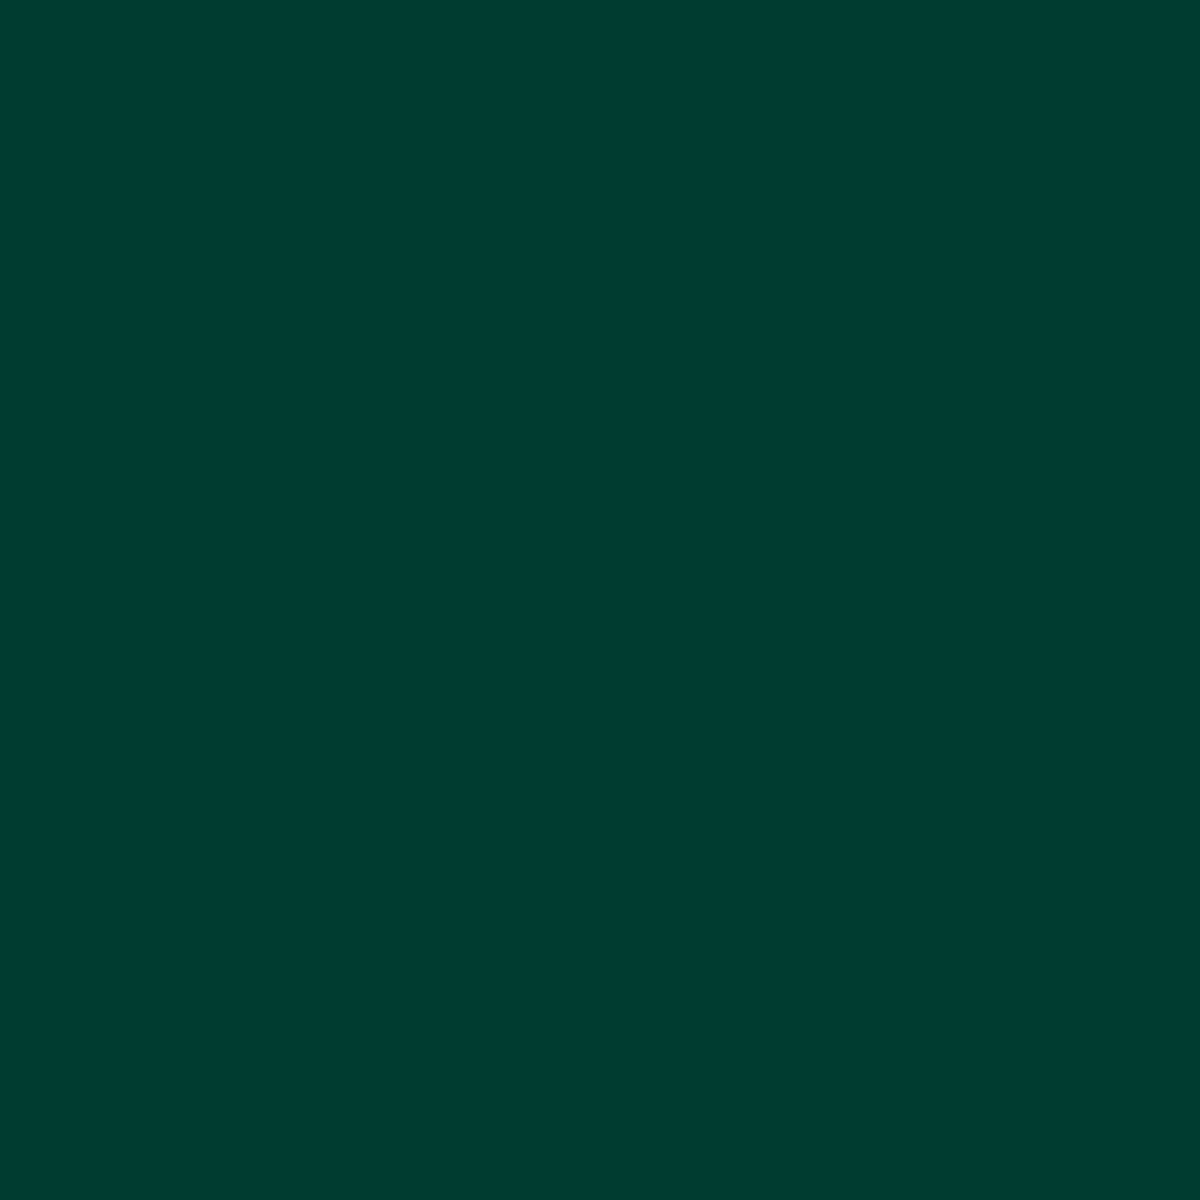 3M Scotchcal film couleur 100-727 vert pin 1,22m x 25m